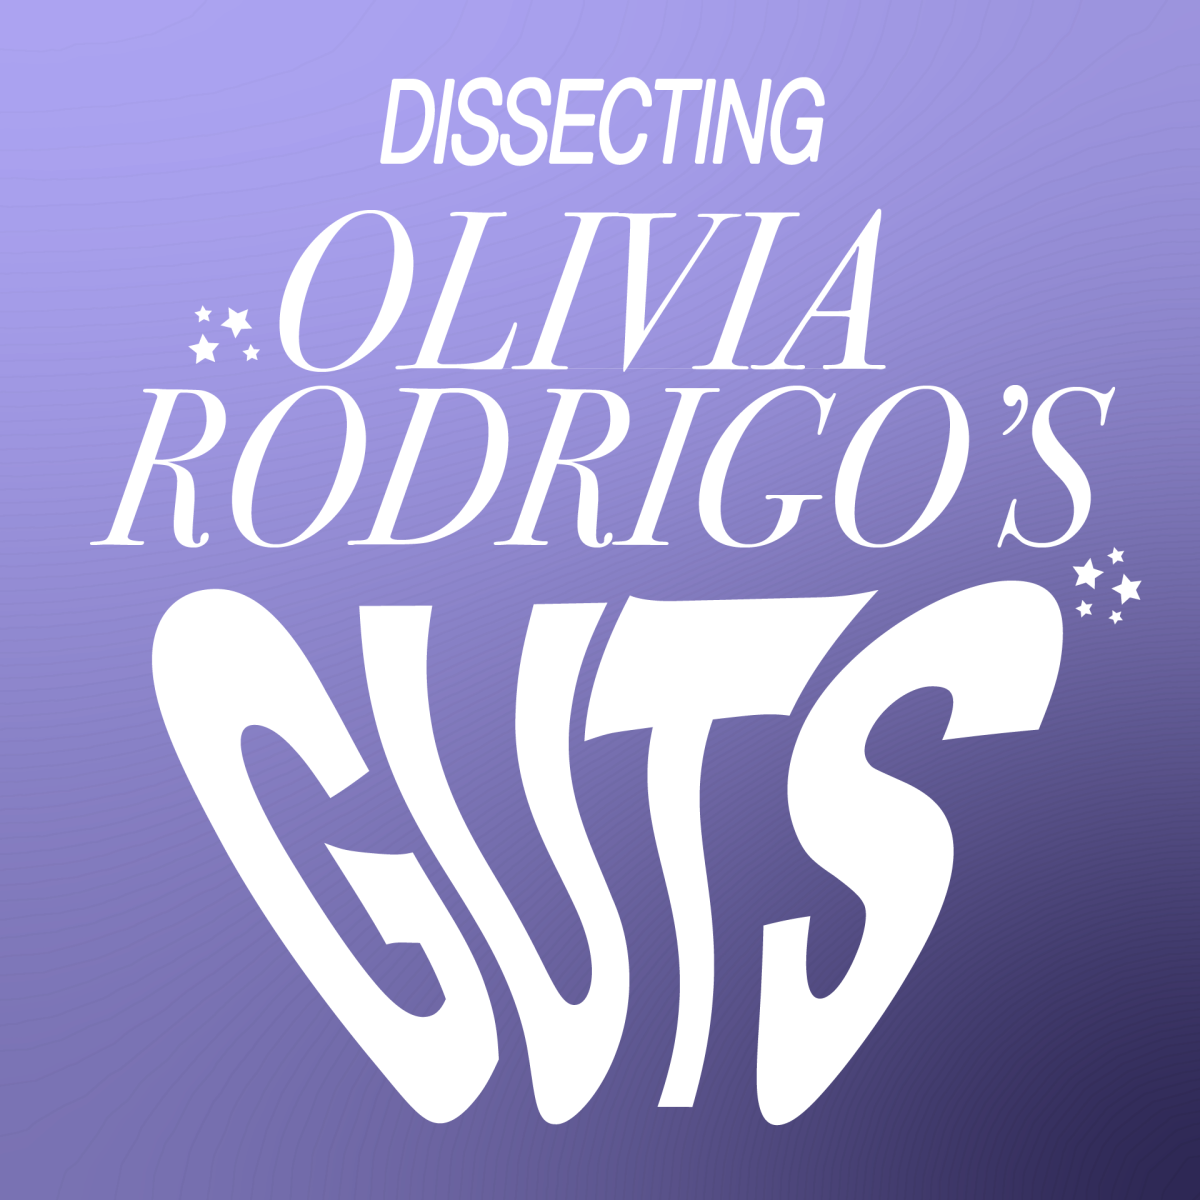 Dissecting+Olivia+Rodrigos+GUTS